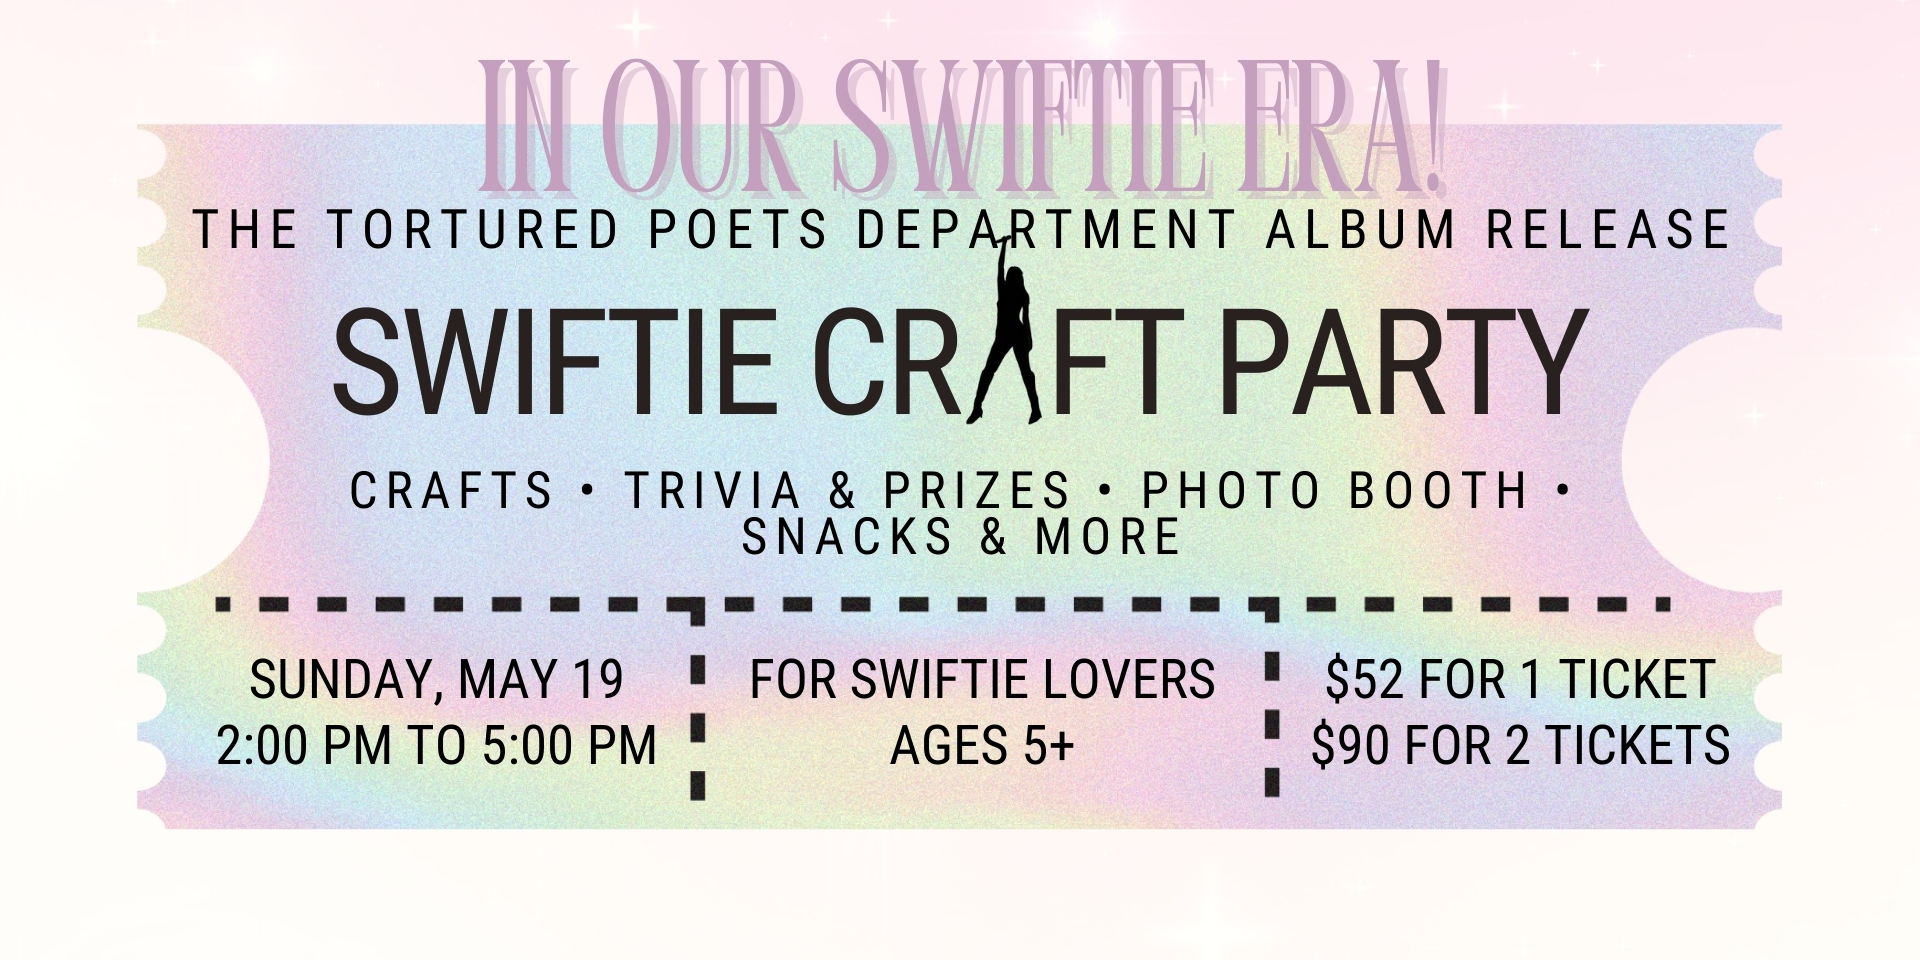 In Our Swiftie Era" Album Release Craft pARTy